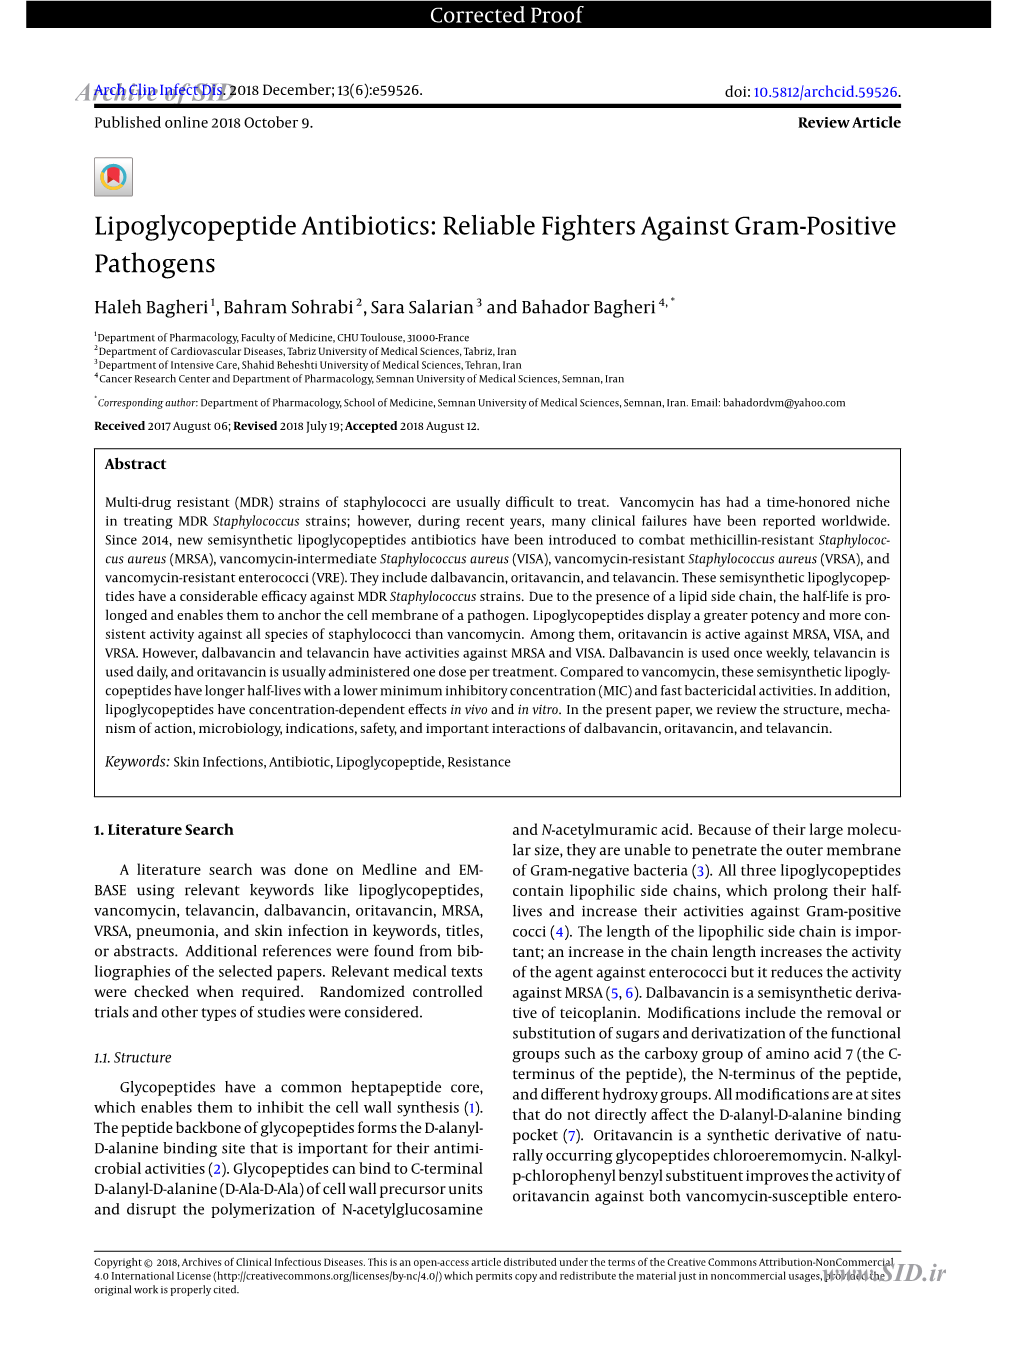 Lipoglycopeptide Antibiotics: Reliable Fighters Against Gram-Positive Pathogens